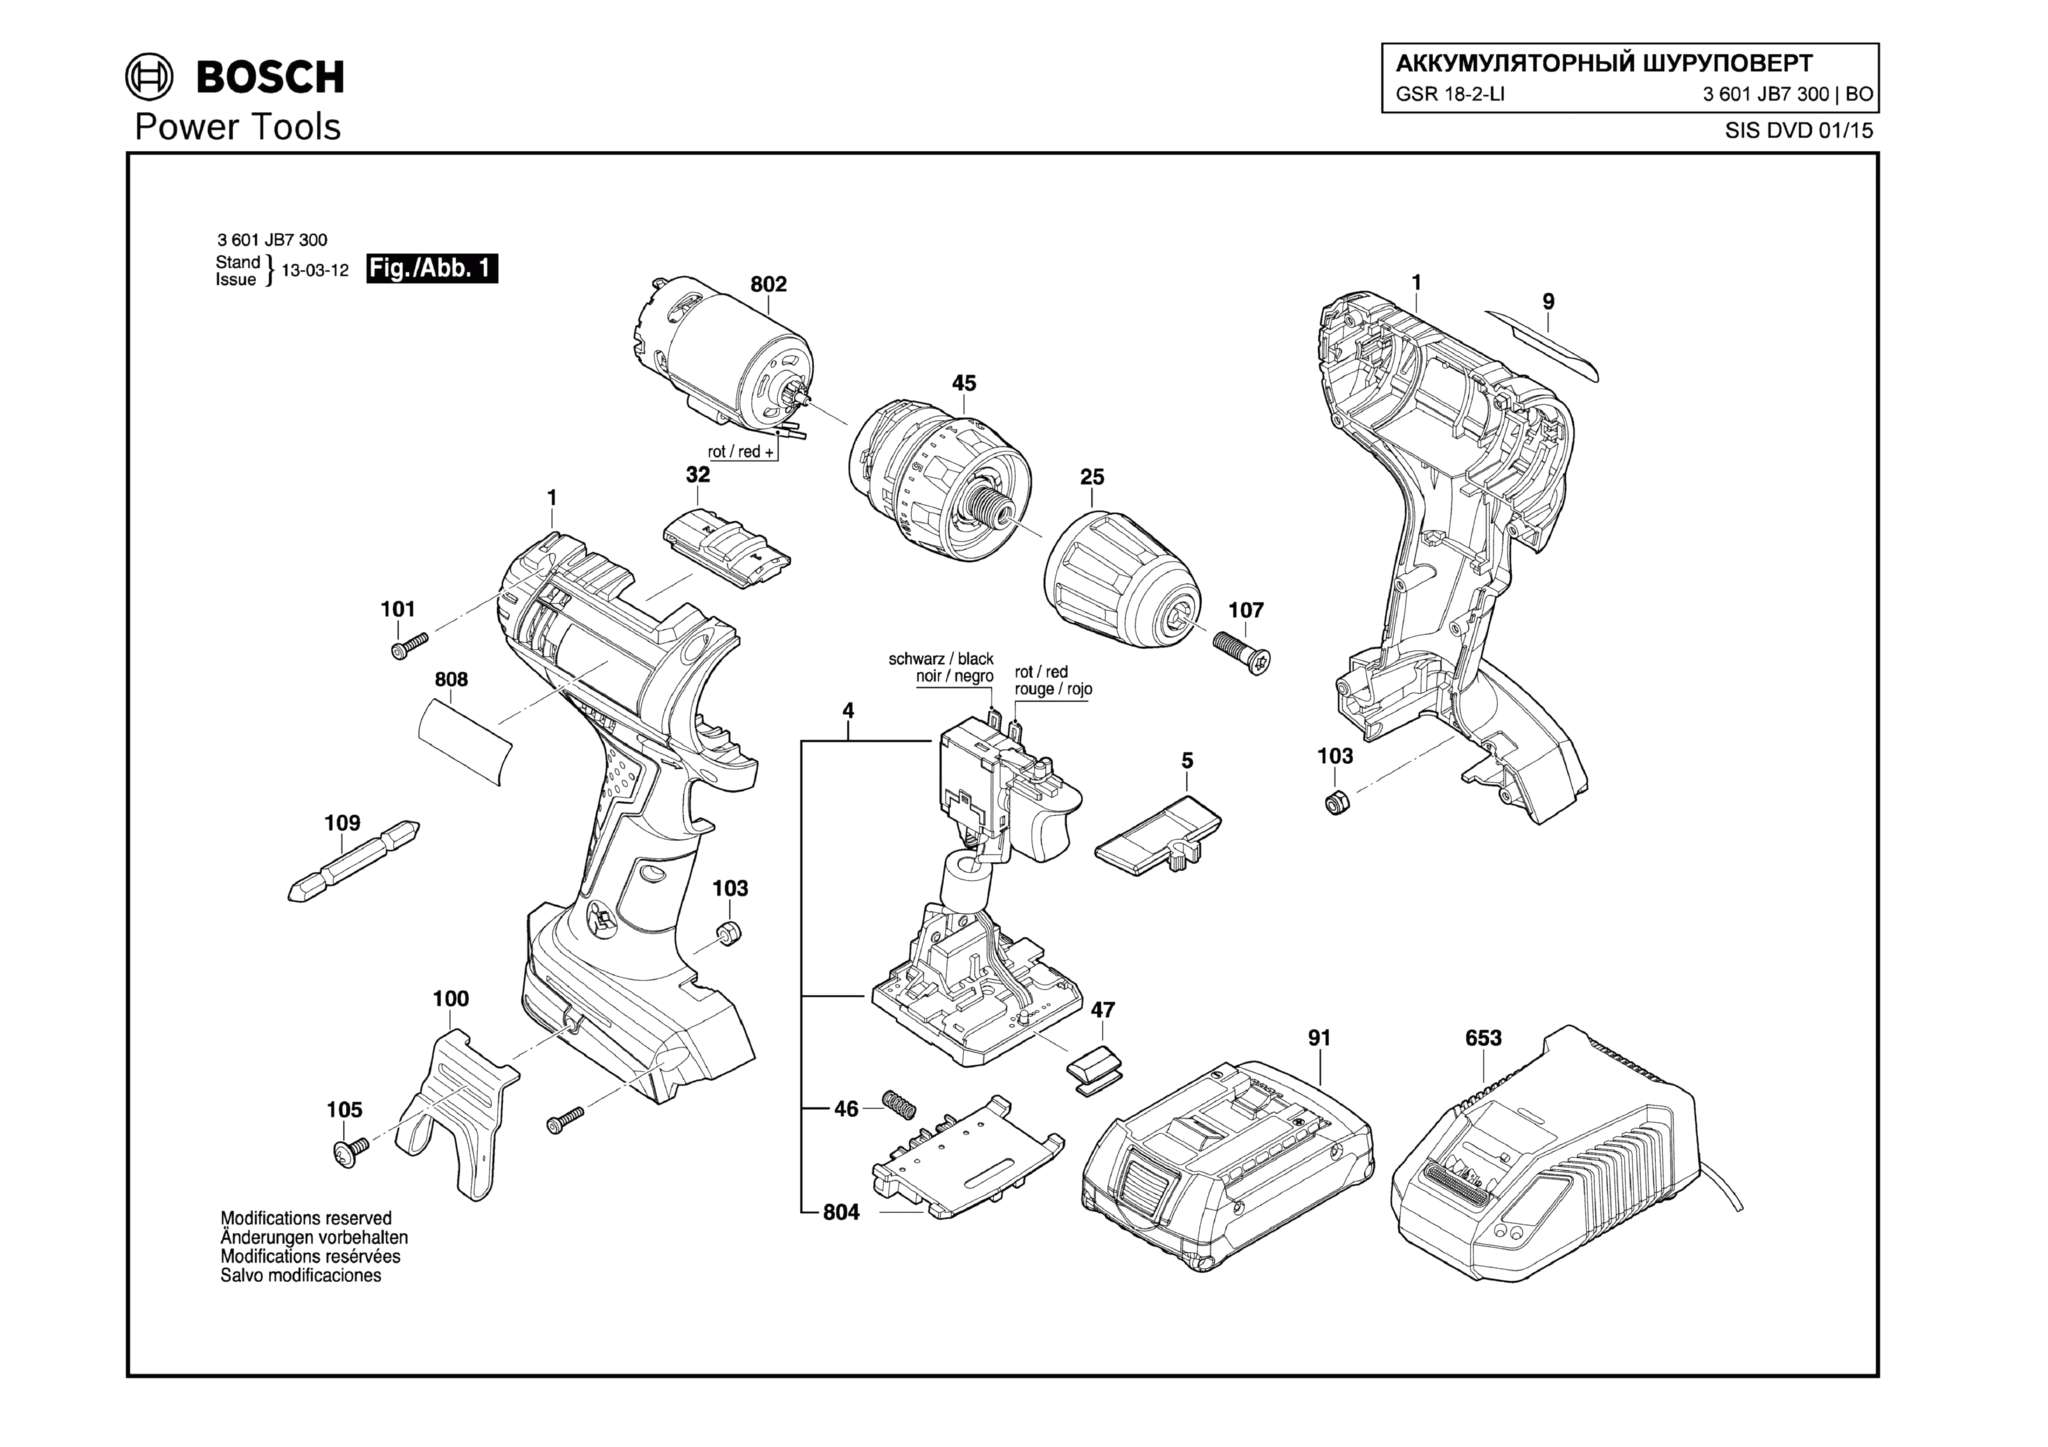 Запчасти, схема и деталировка Bosch GSR 18-2-LI (ТИП 3601JB7300)